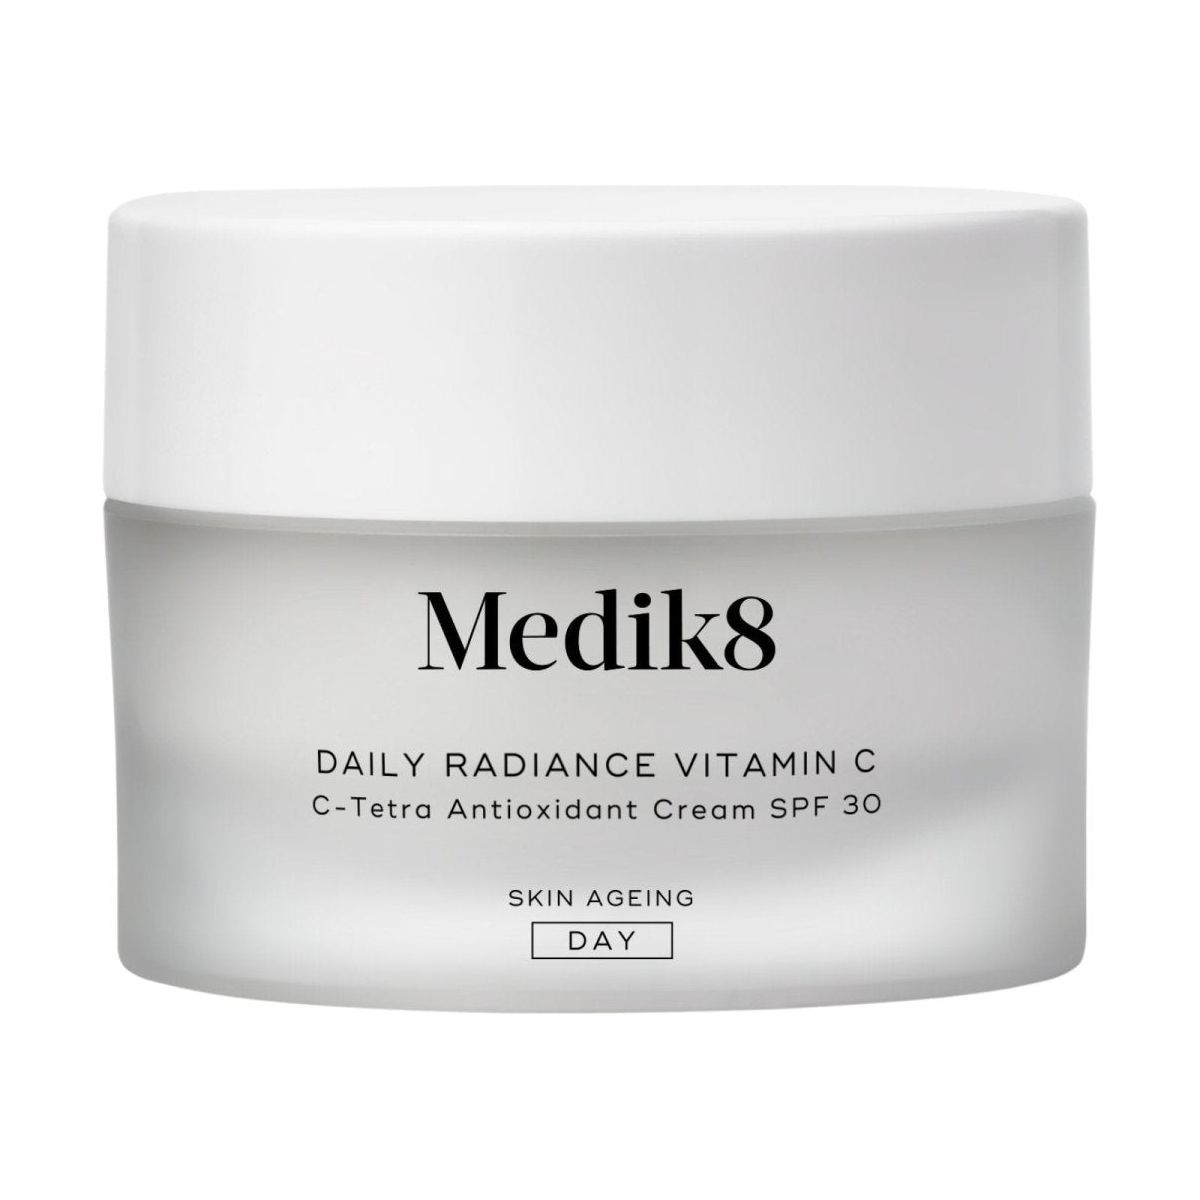 Medik8 | Daily Radiance Vitamin C - DG International Ventures Limited